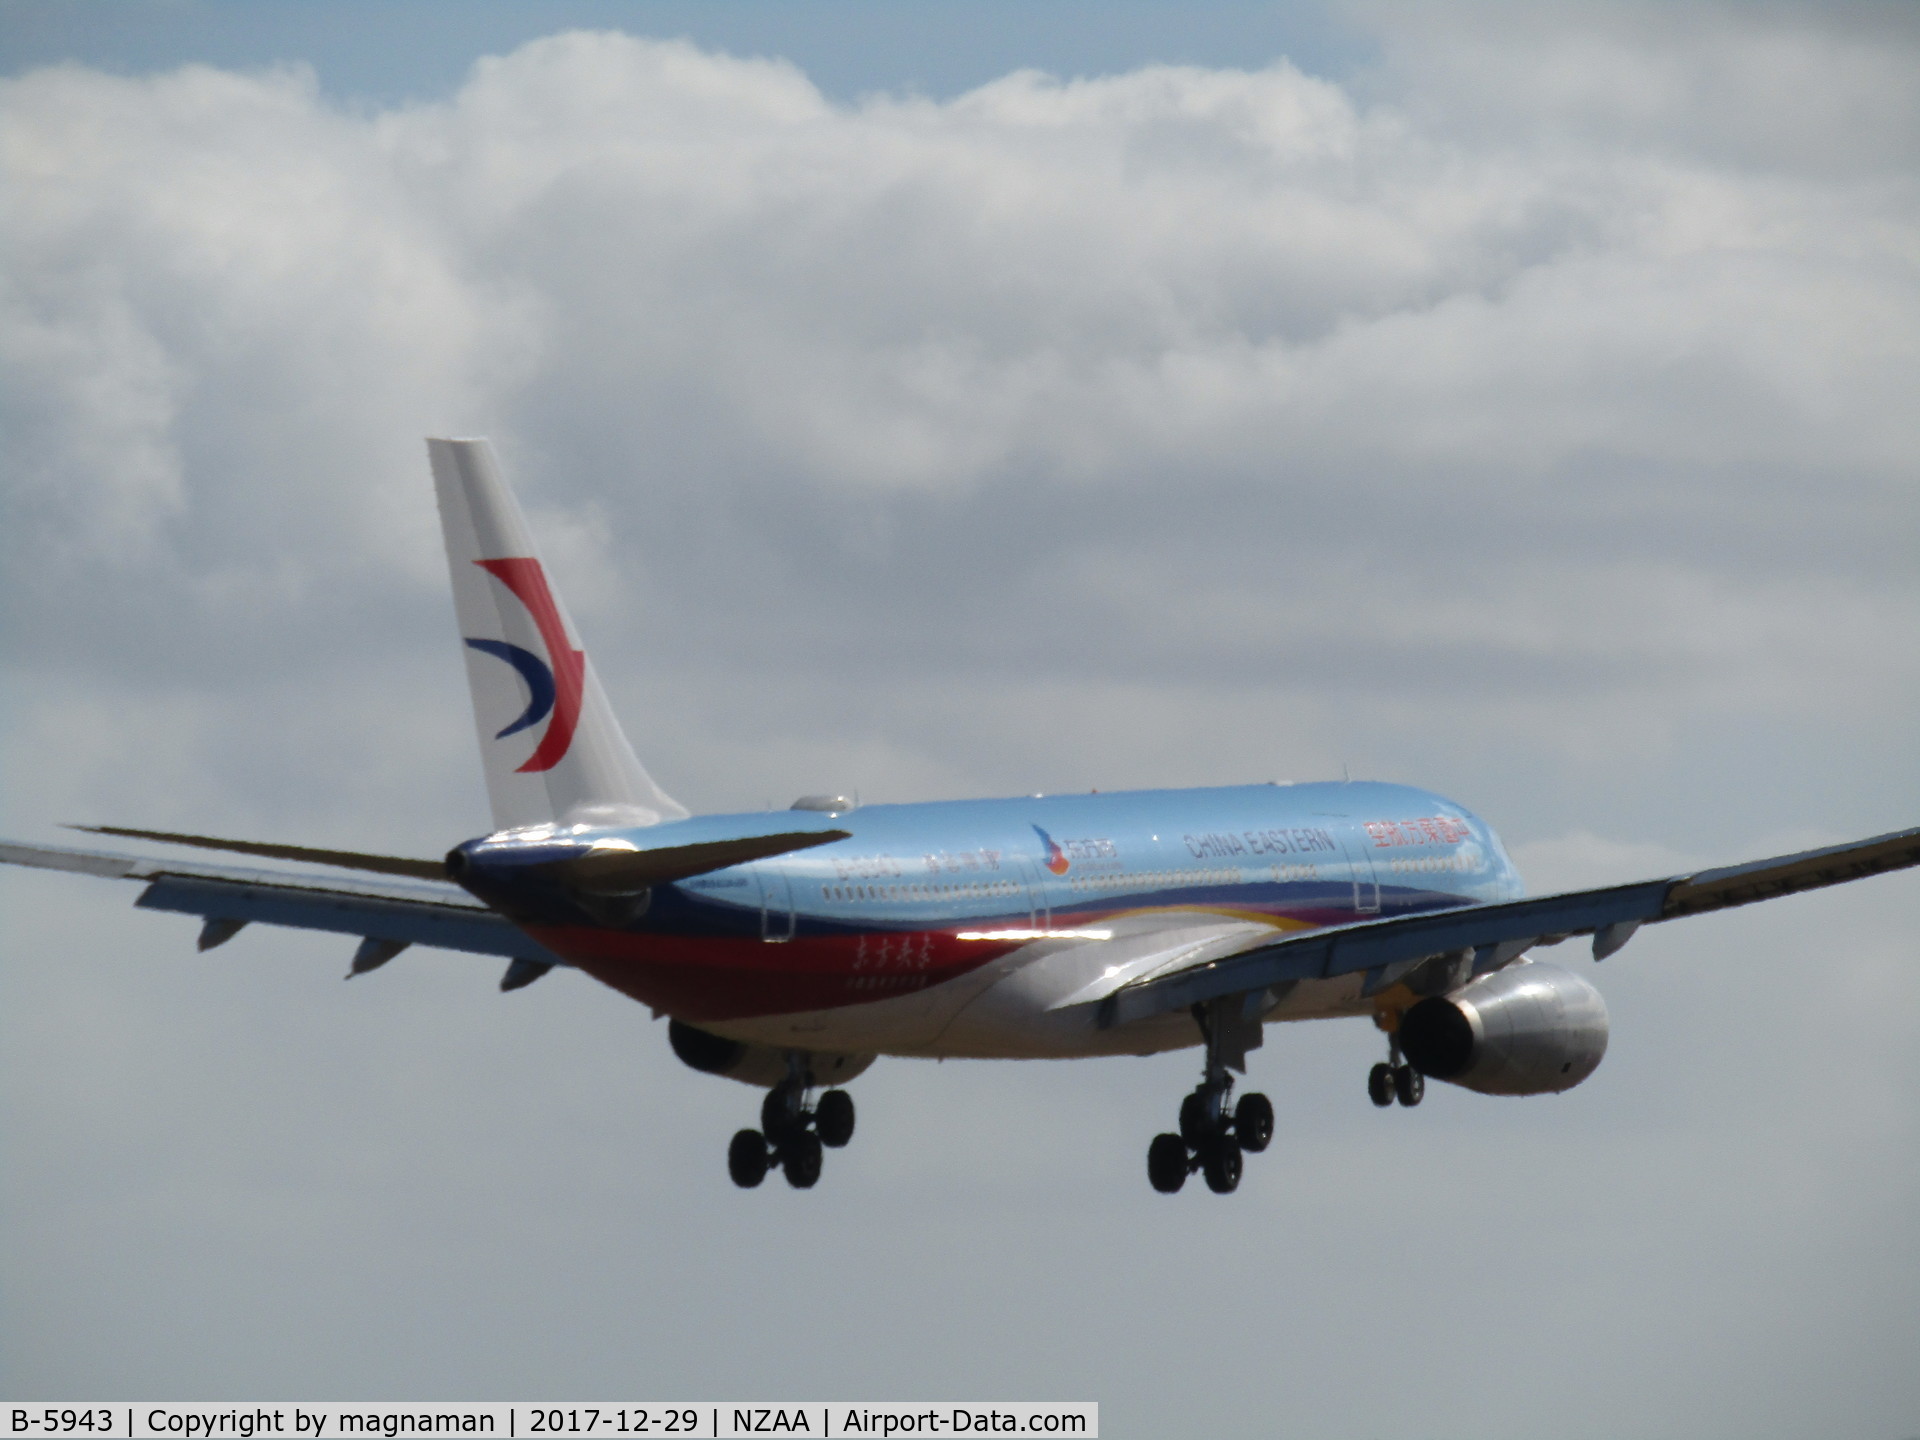 B-5943, 2014 Airbus A330-243 C/N 1520, landing at NZ